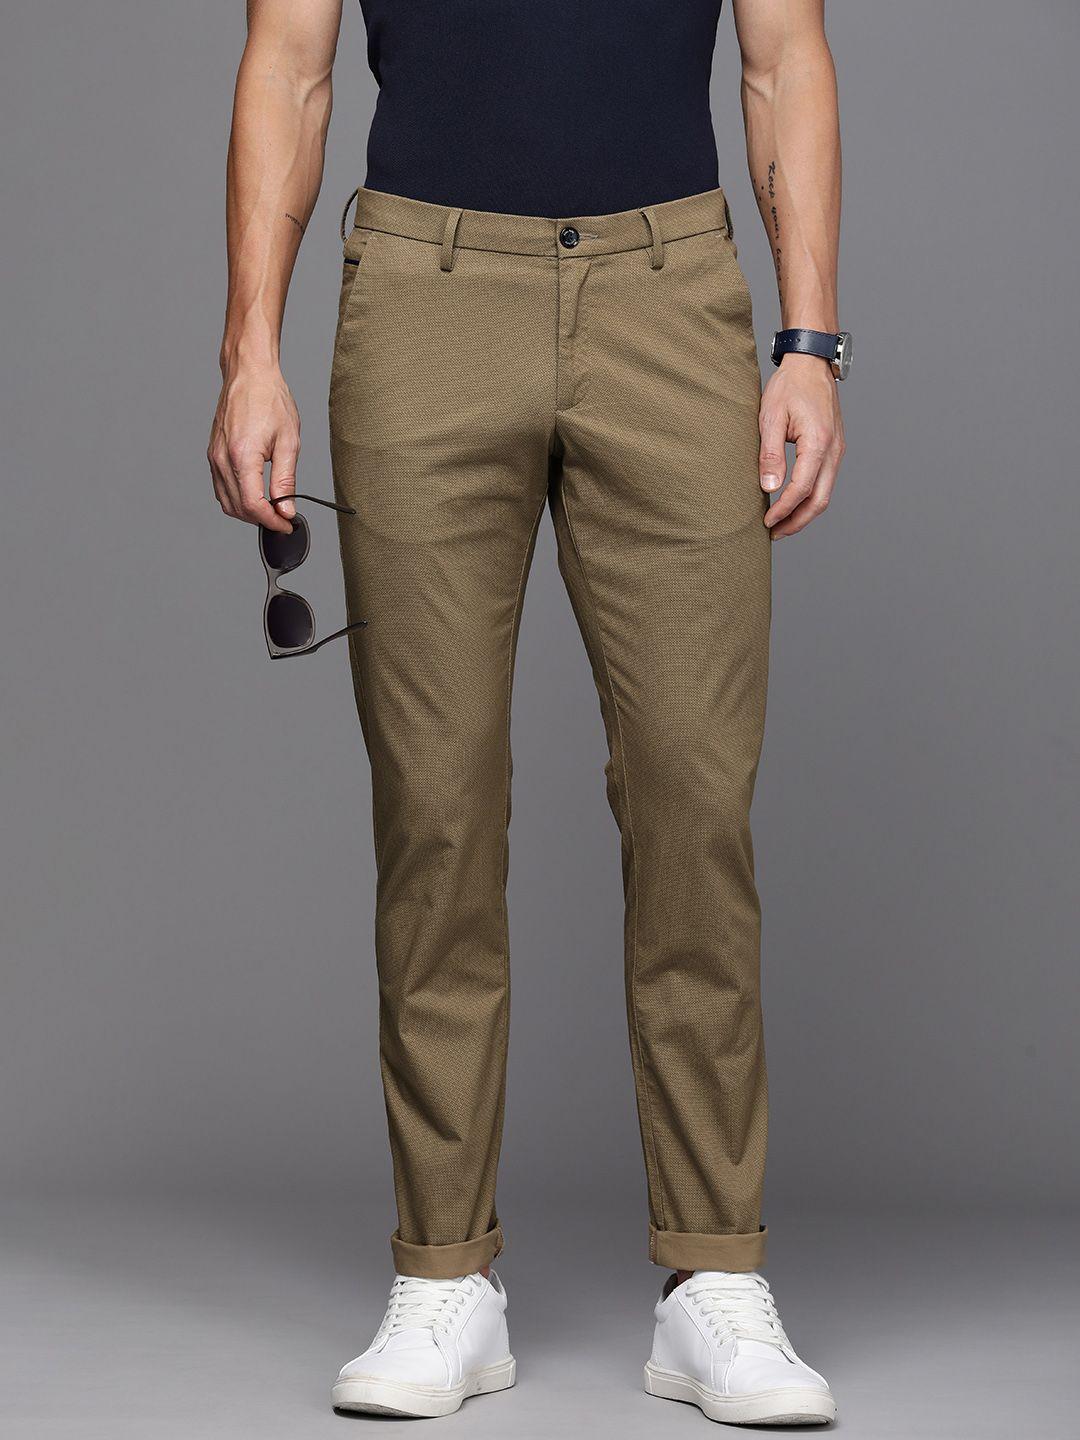 allen-solly-men-geometric-printed-slim-fit-trousers